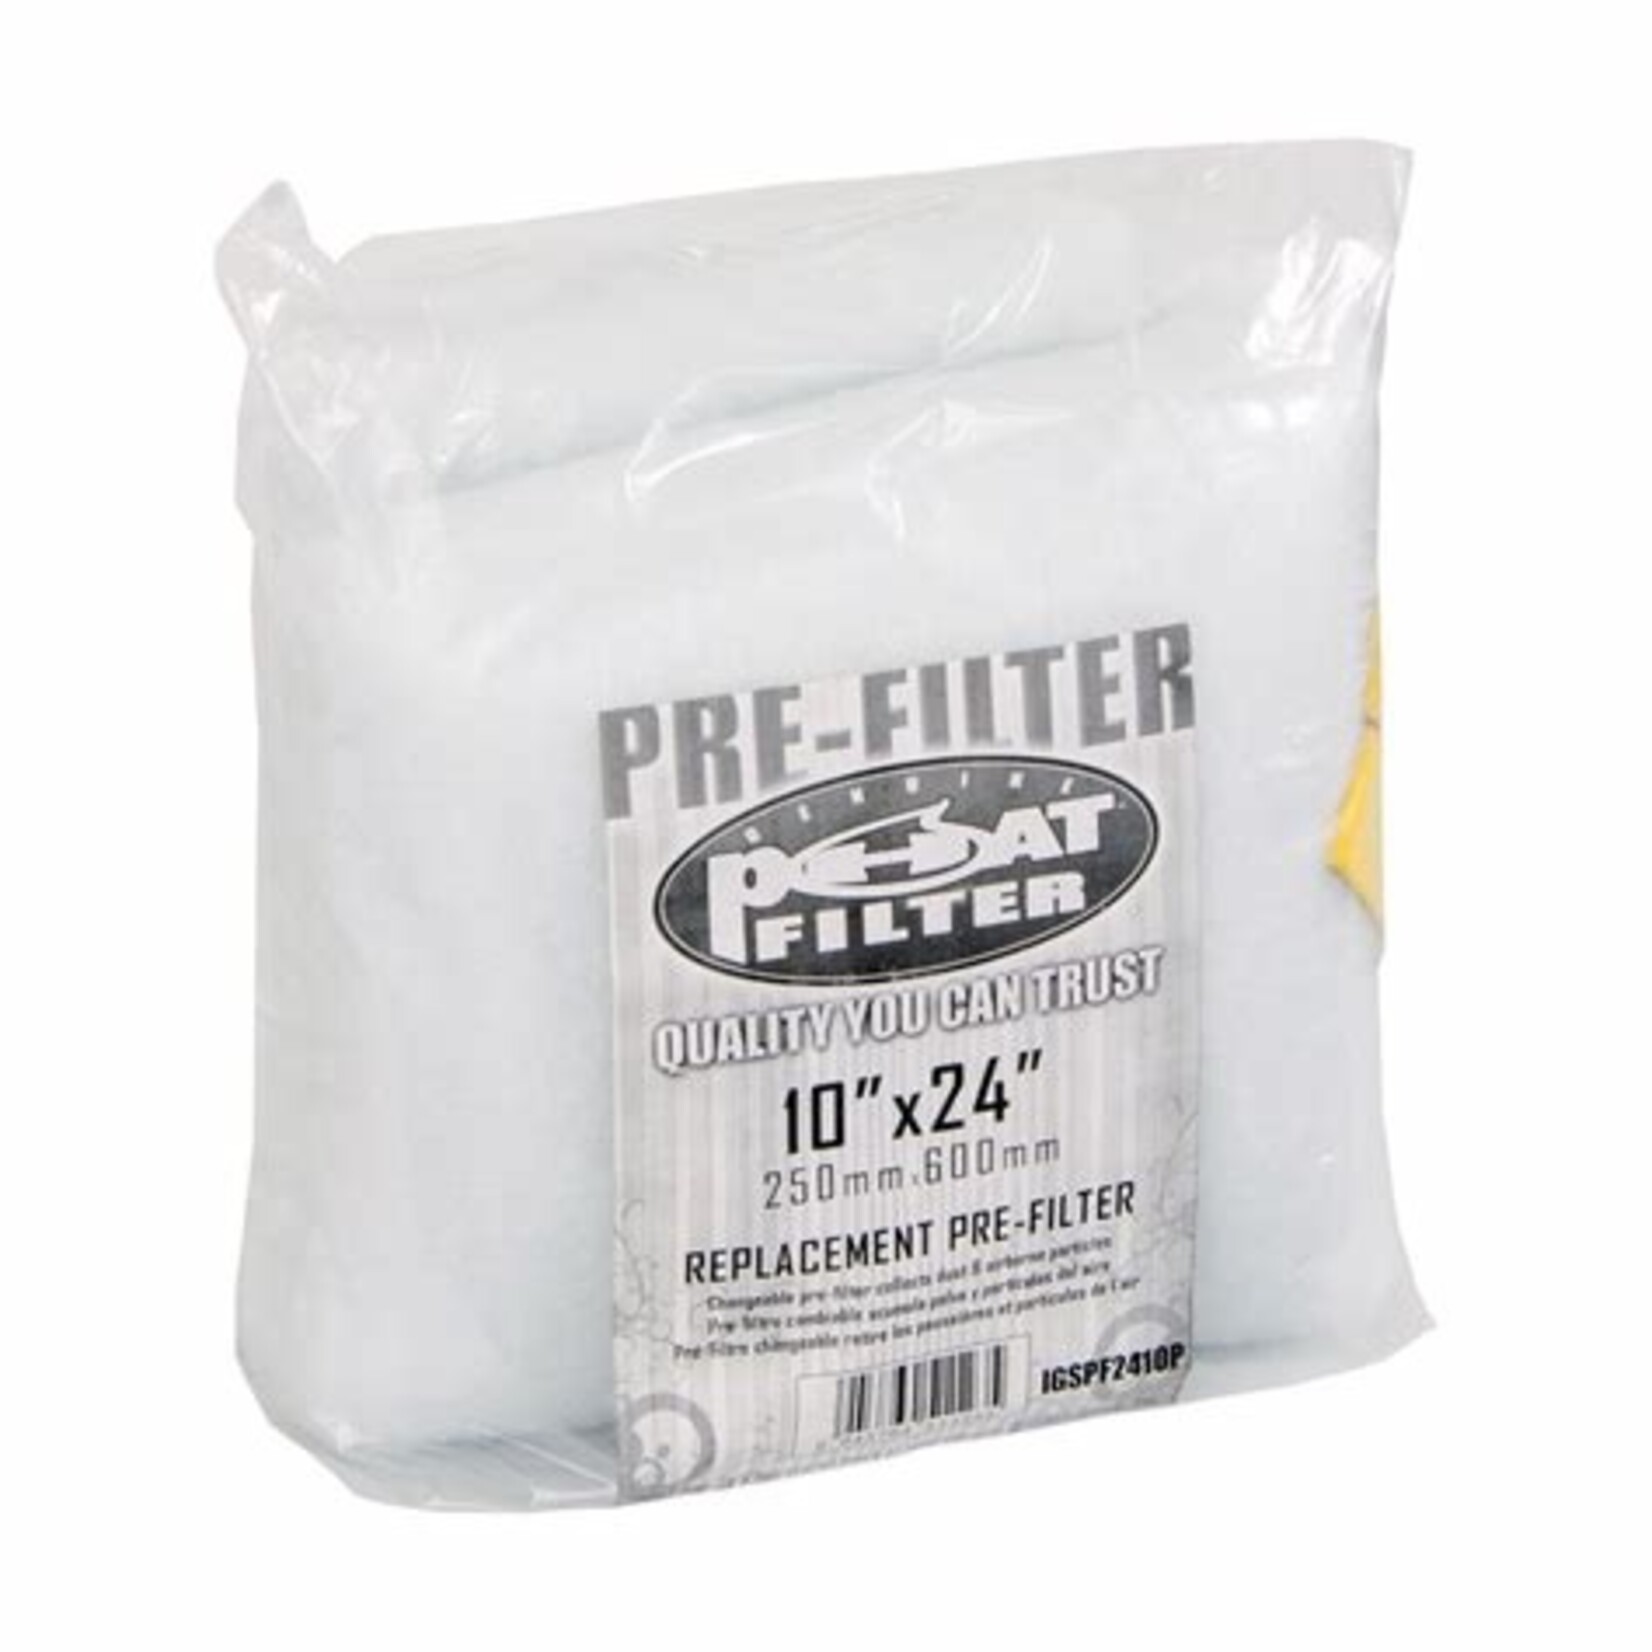 Phat Pre-Filter 24"x10"